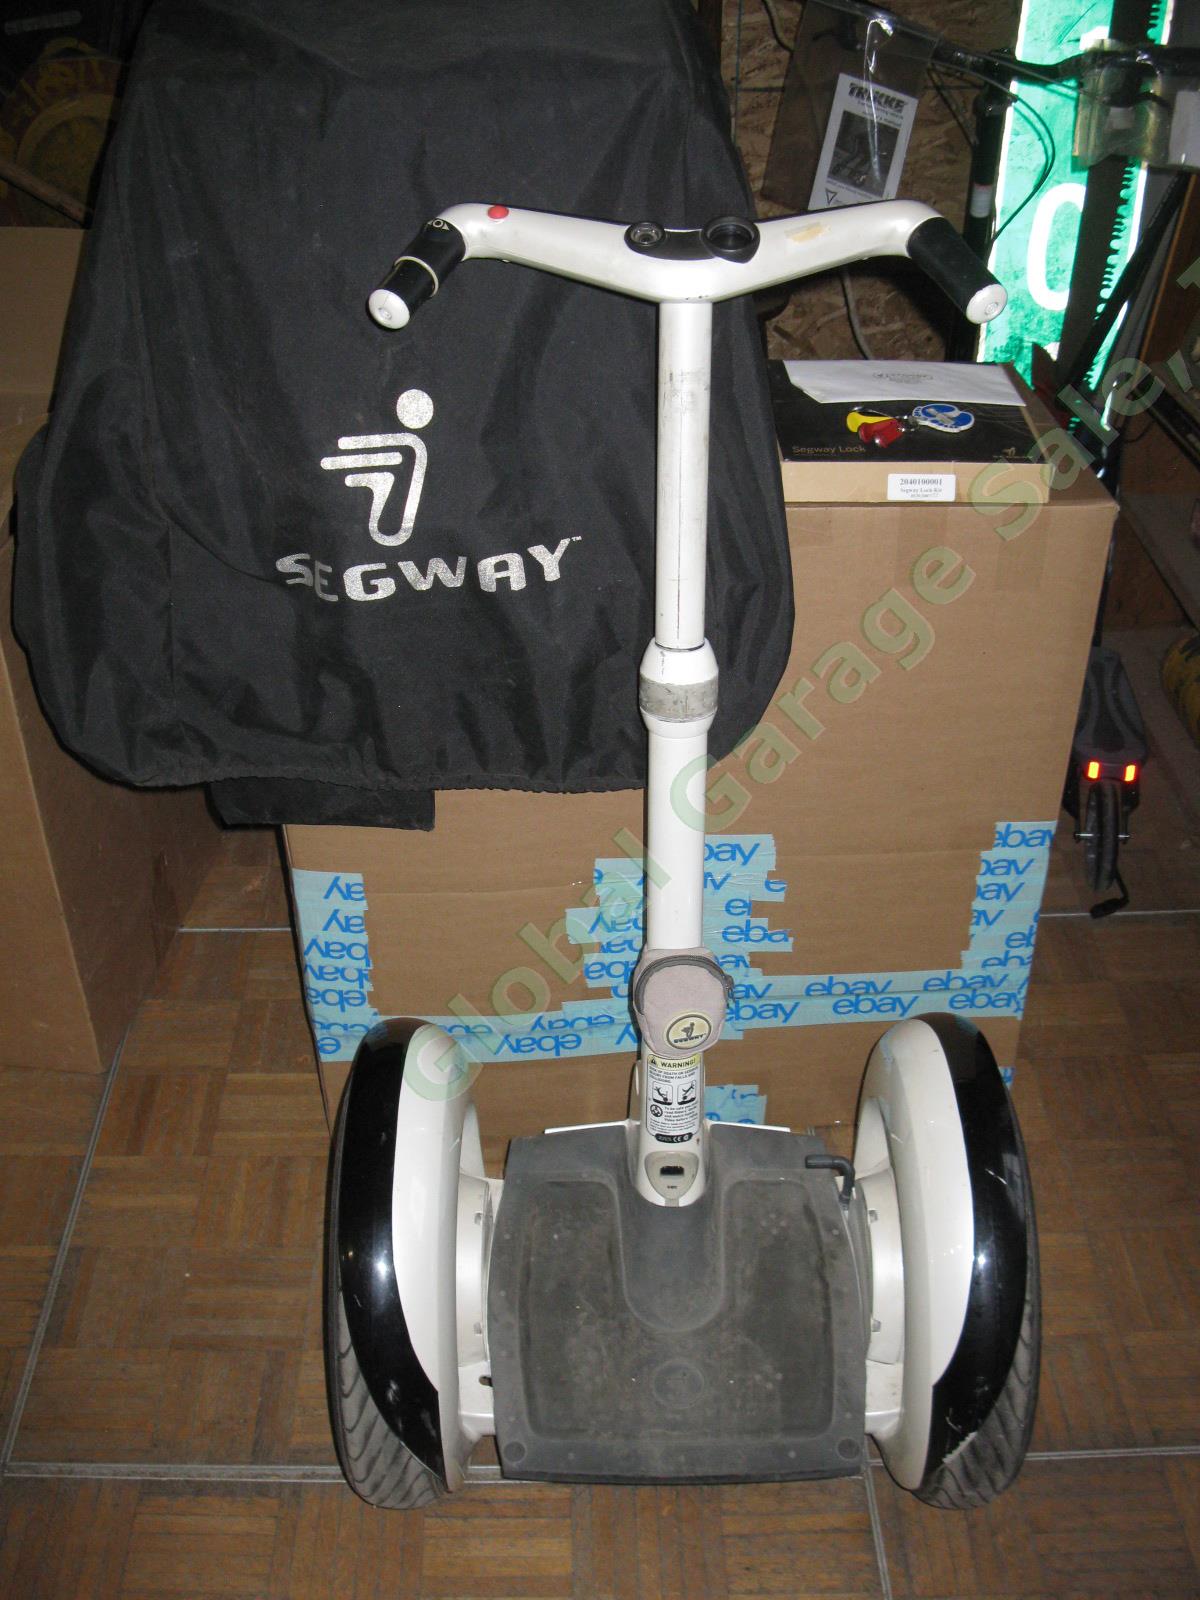 Segway Personal Transporter i-Series Model HT i167 4 Keys Kick Stand Cover